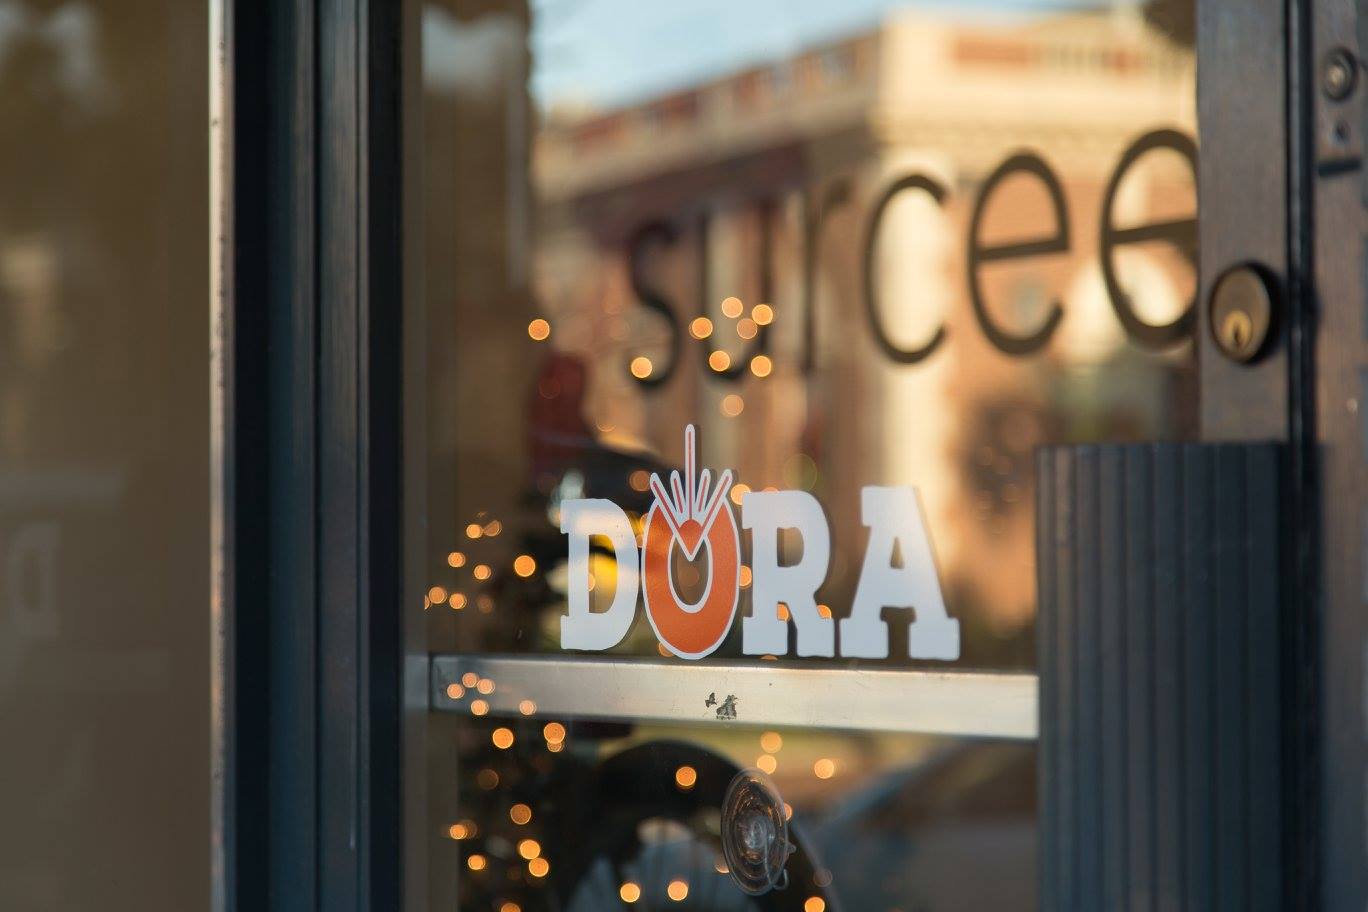 The Downtown Orangeburg Revitalization Association (DORA) Gallery